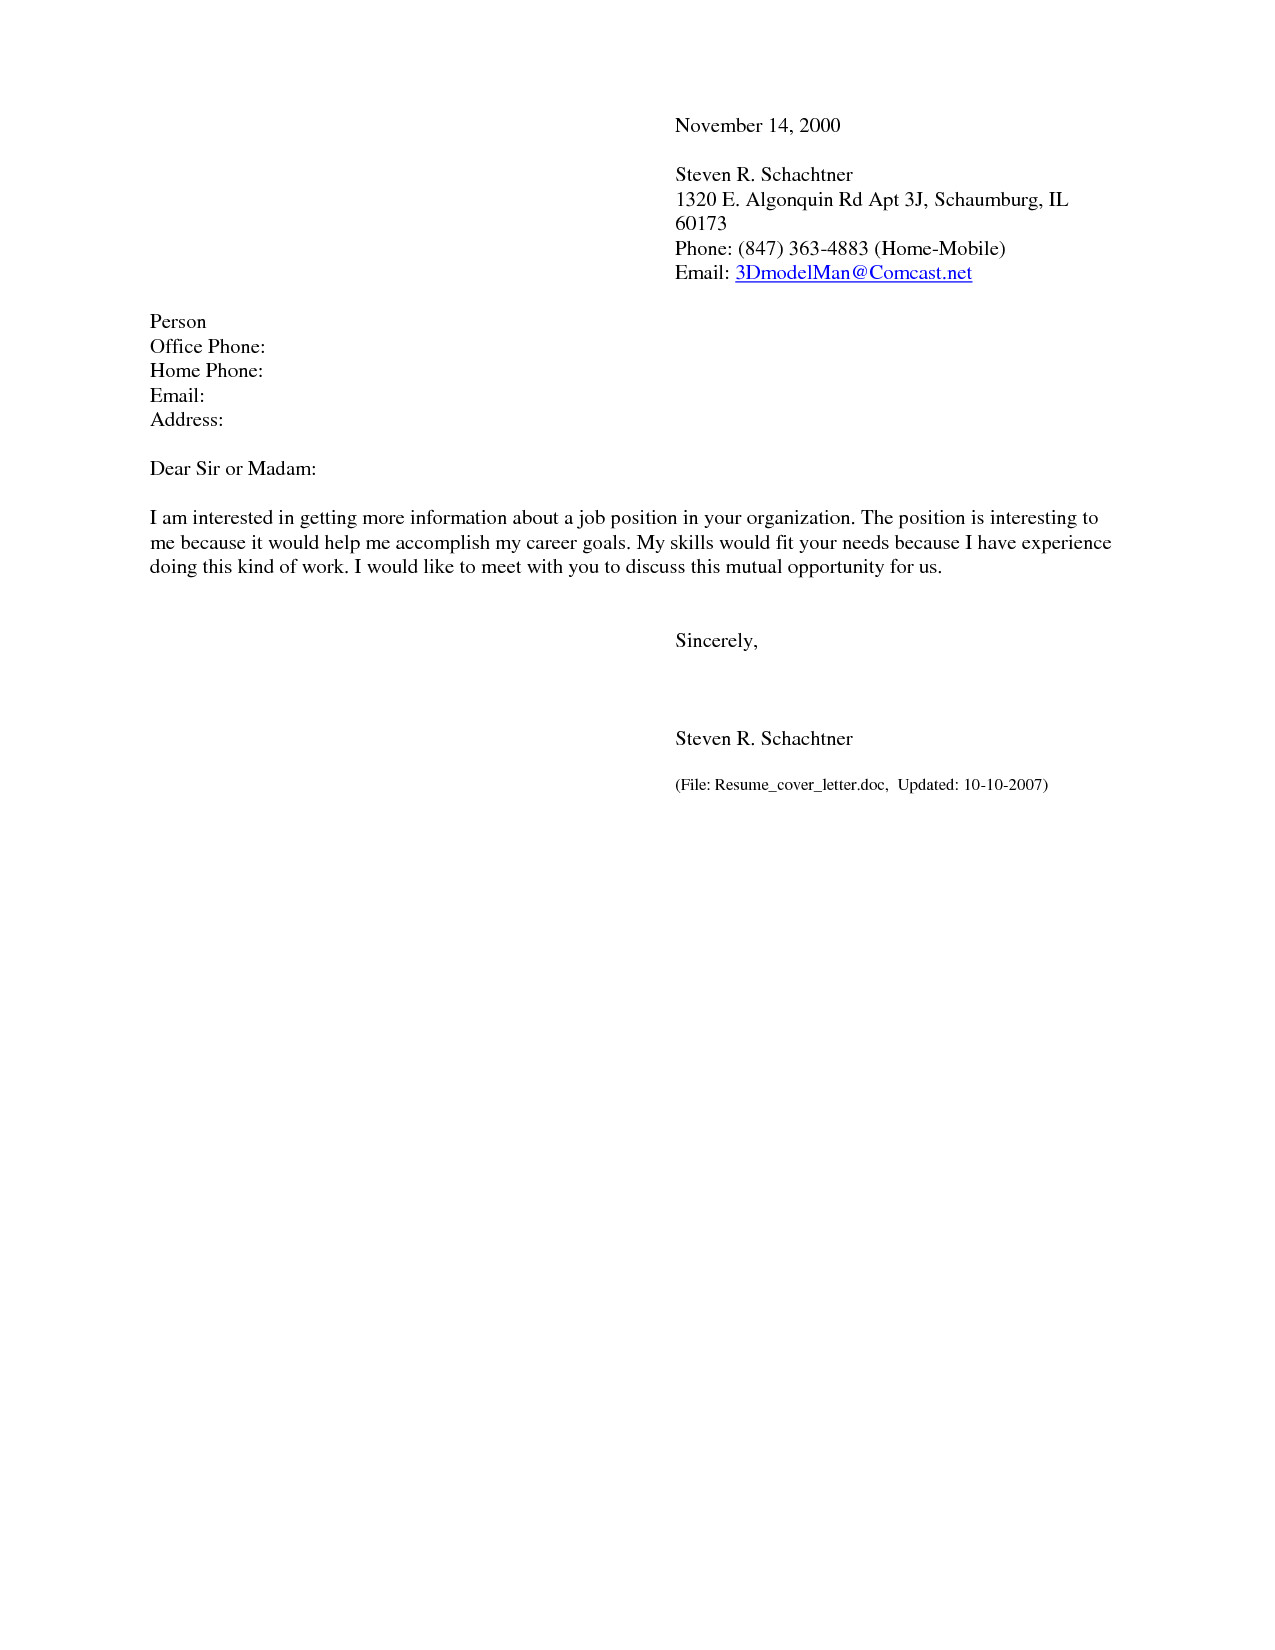 resume cover letter via email sample